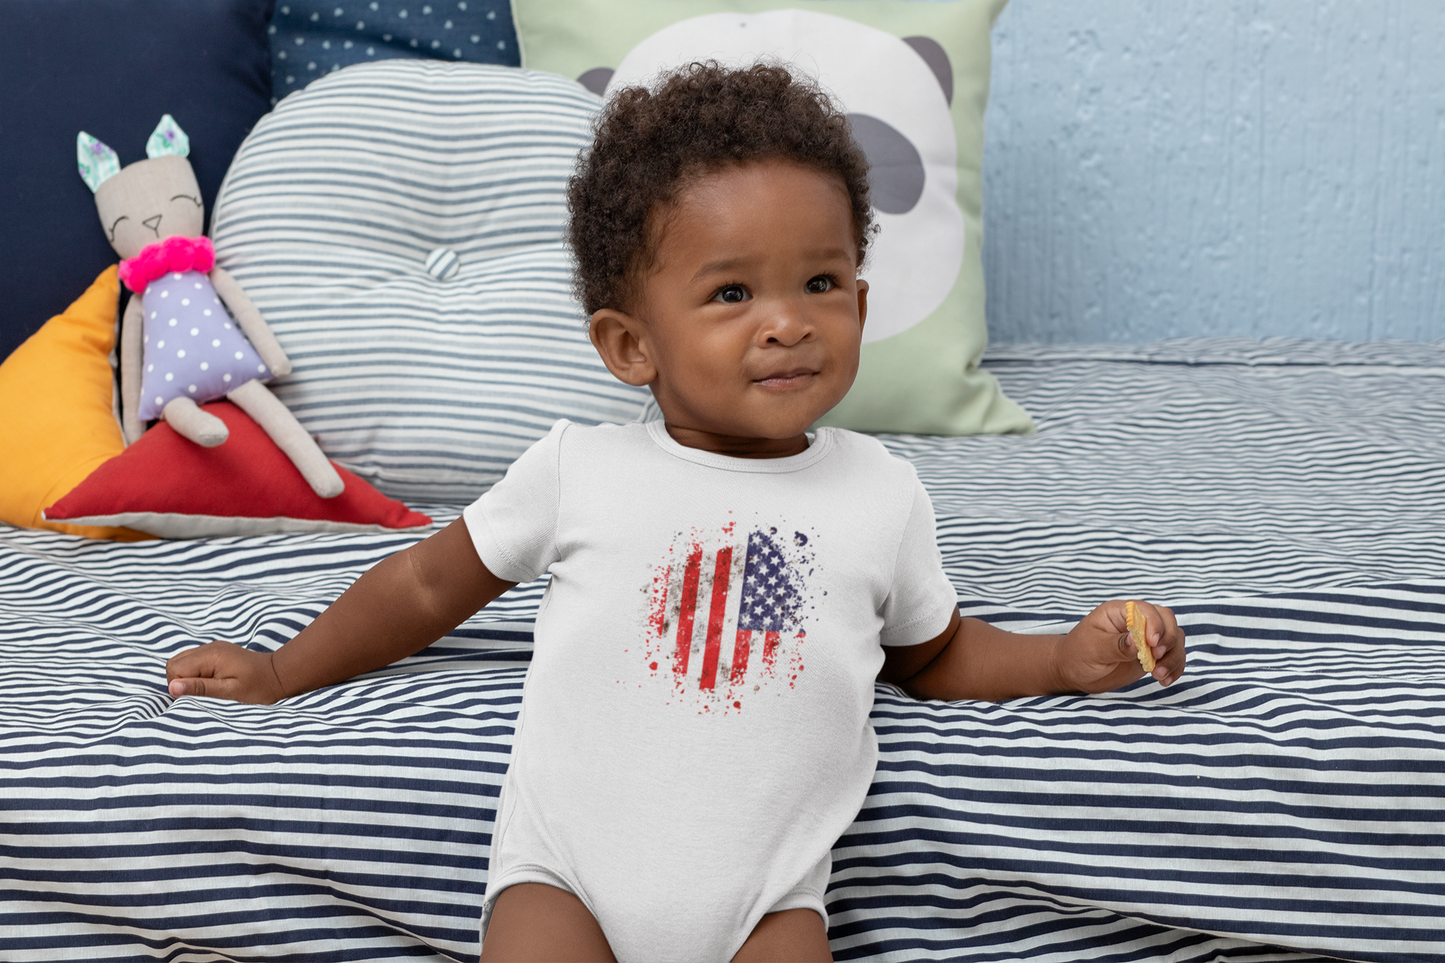 American Flag - Unisex Baby Onesie 6, 12, & 24 Month